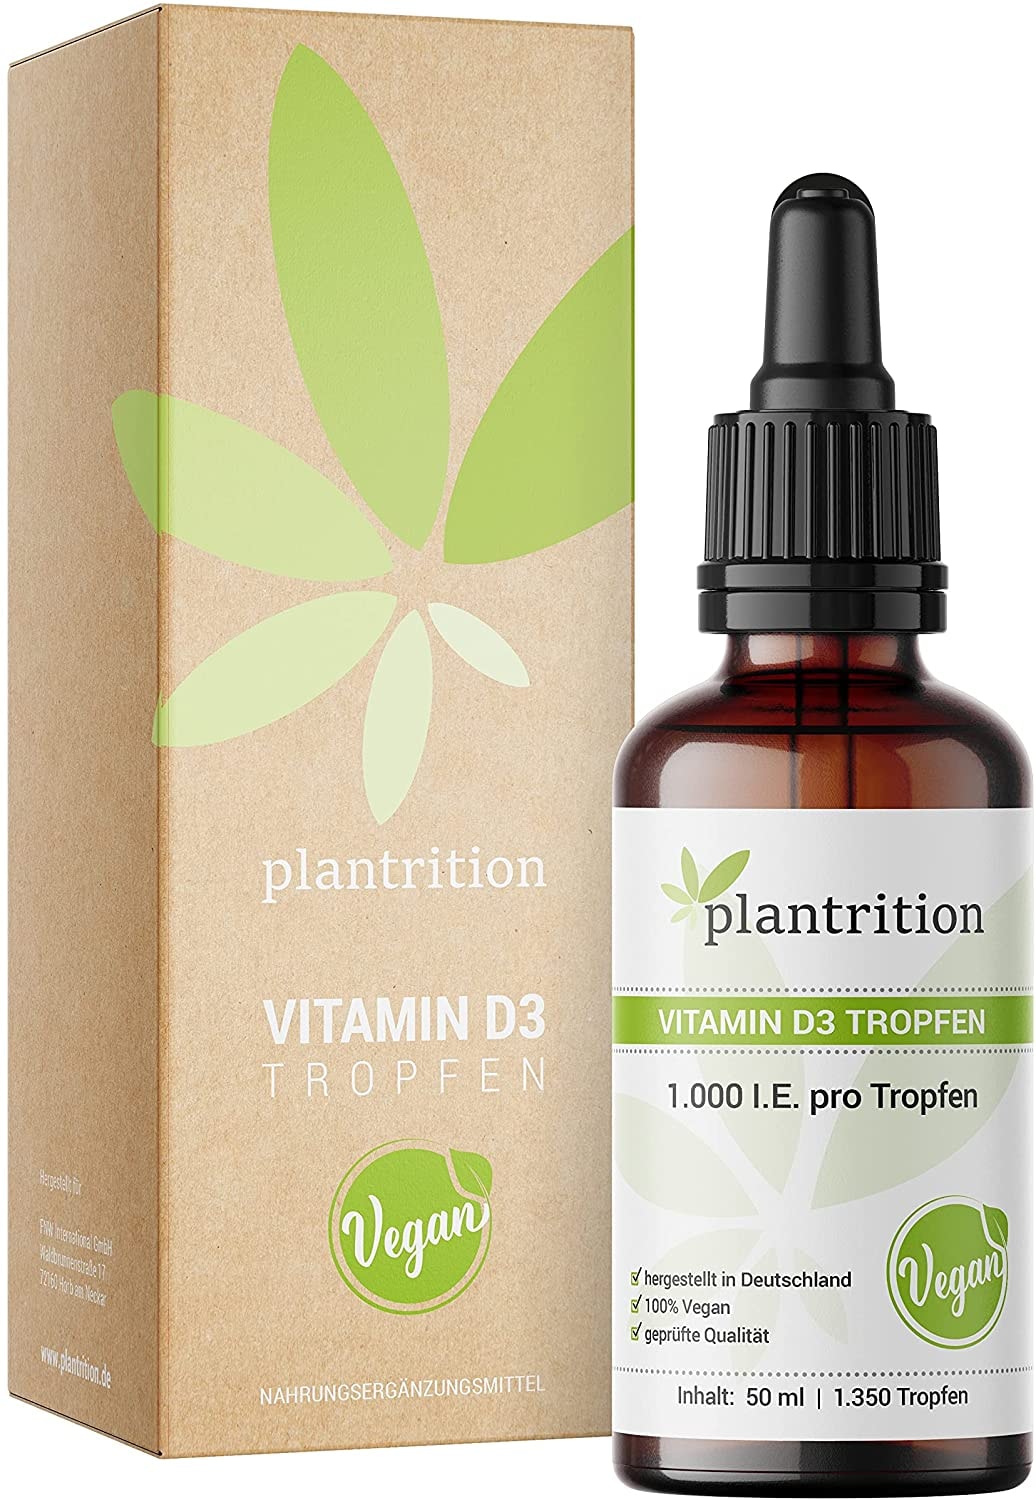 plantrition Vitamin D3 Tropfen Vegan 1000 I.E. pro Tropfen 1.350 Tropfen Vitamin D Öl - Vitamin D3 aus Flechten (Cholecalciferol) MCT Öl Kokosbasis Made in Germany - 1 Flasche (50ml)